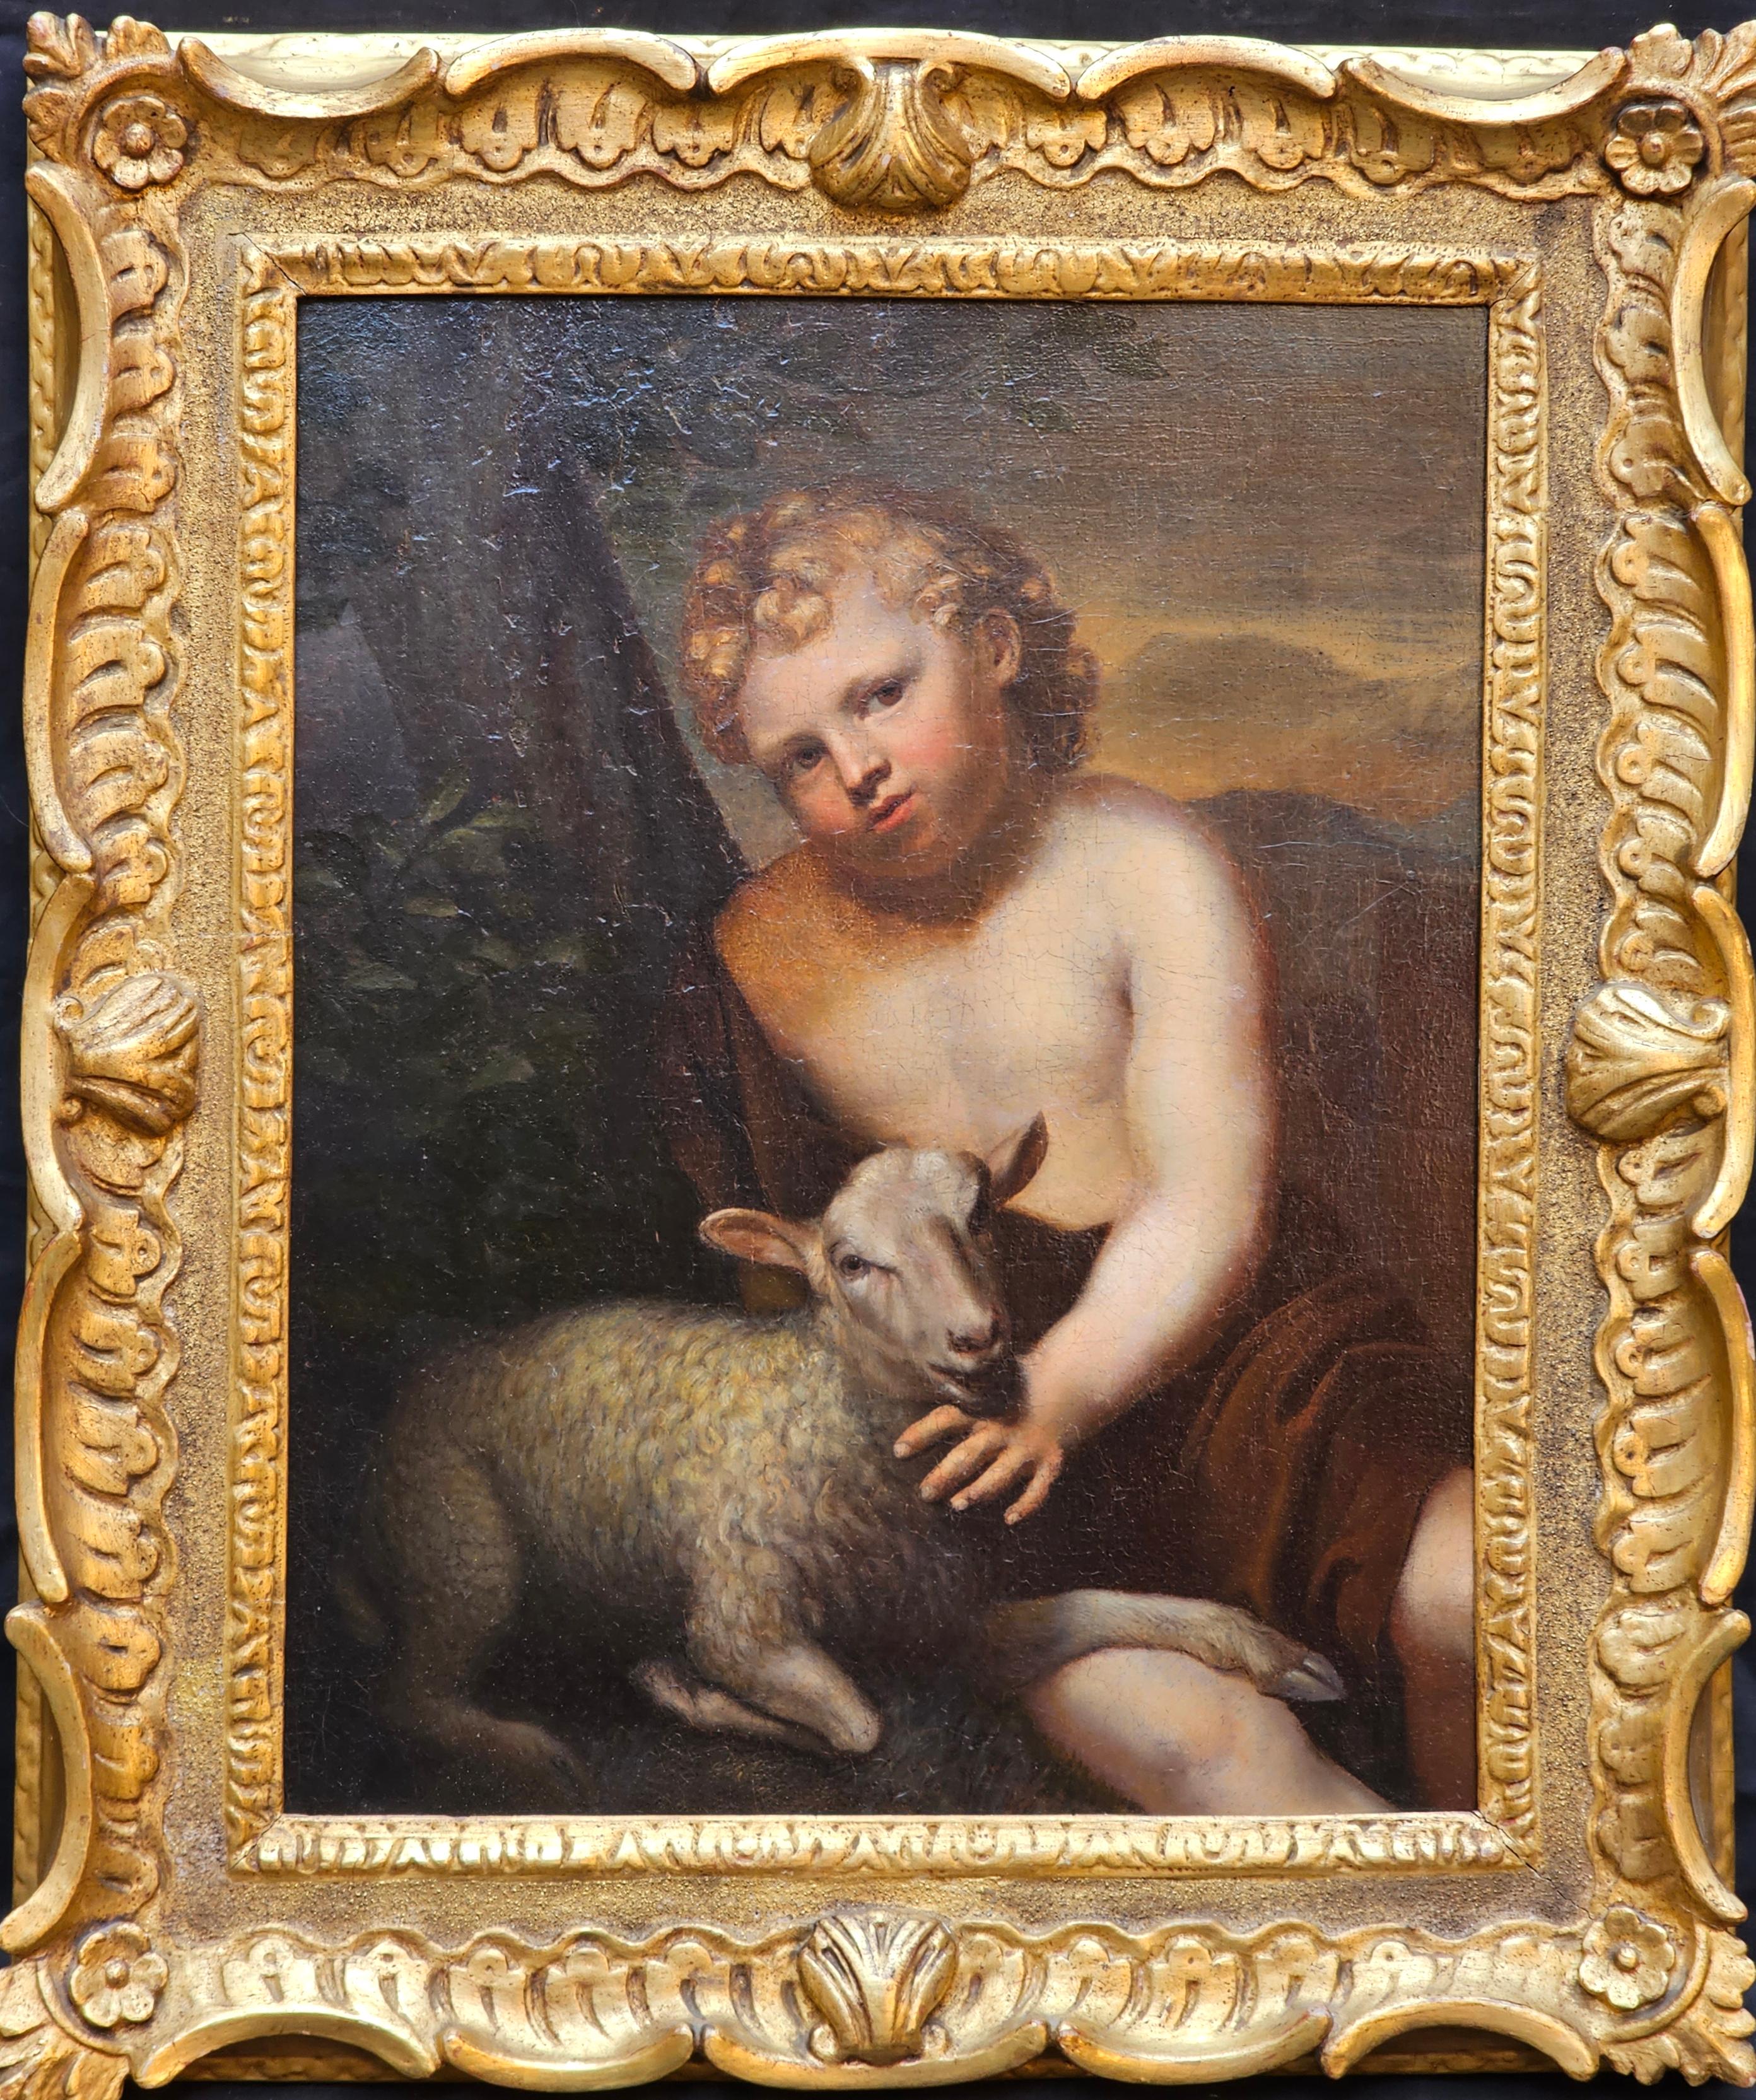 Unknown Portrait Painting – The Infant St. John the Baptist mit Lamm – Ölgemälde eines alten Meisters 